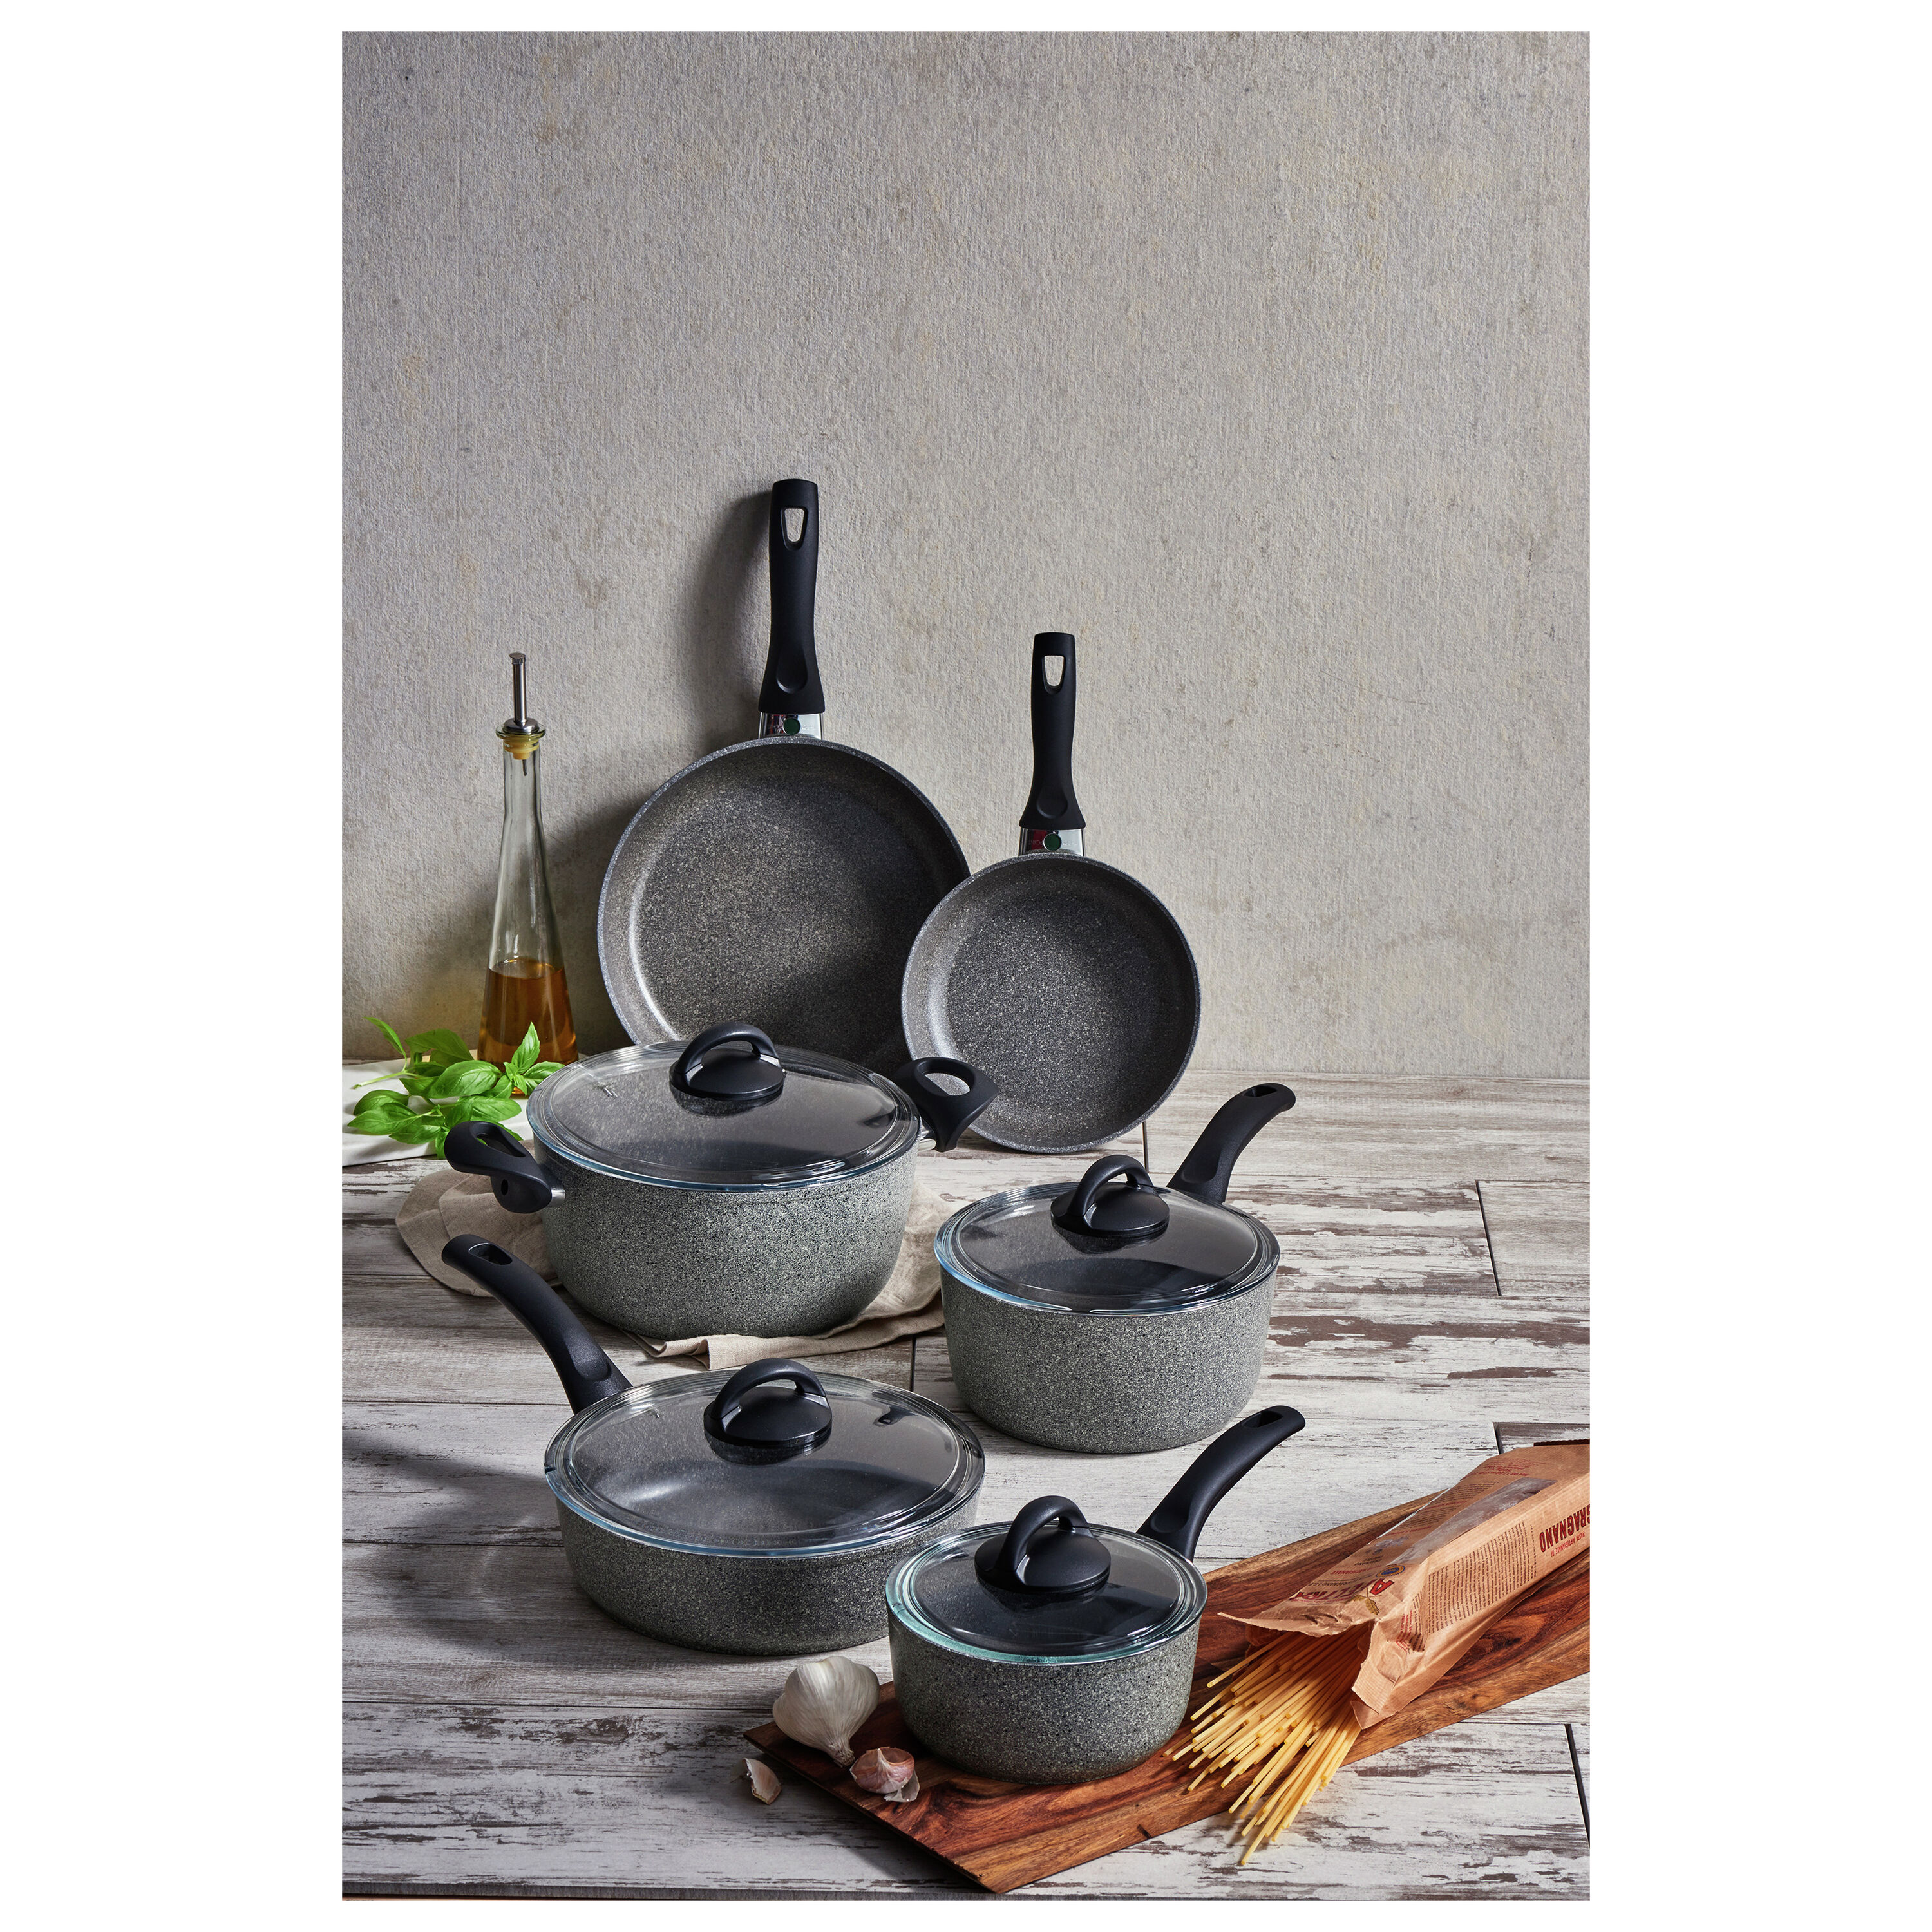 Granitestone Pots and Pans Set Ceramic Nonstick Cookware Set 10